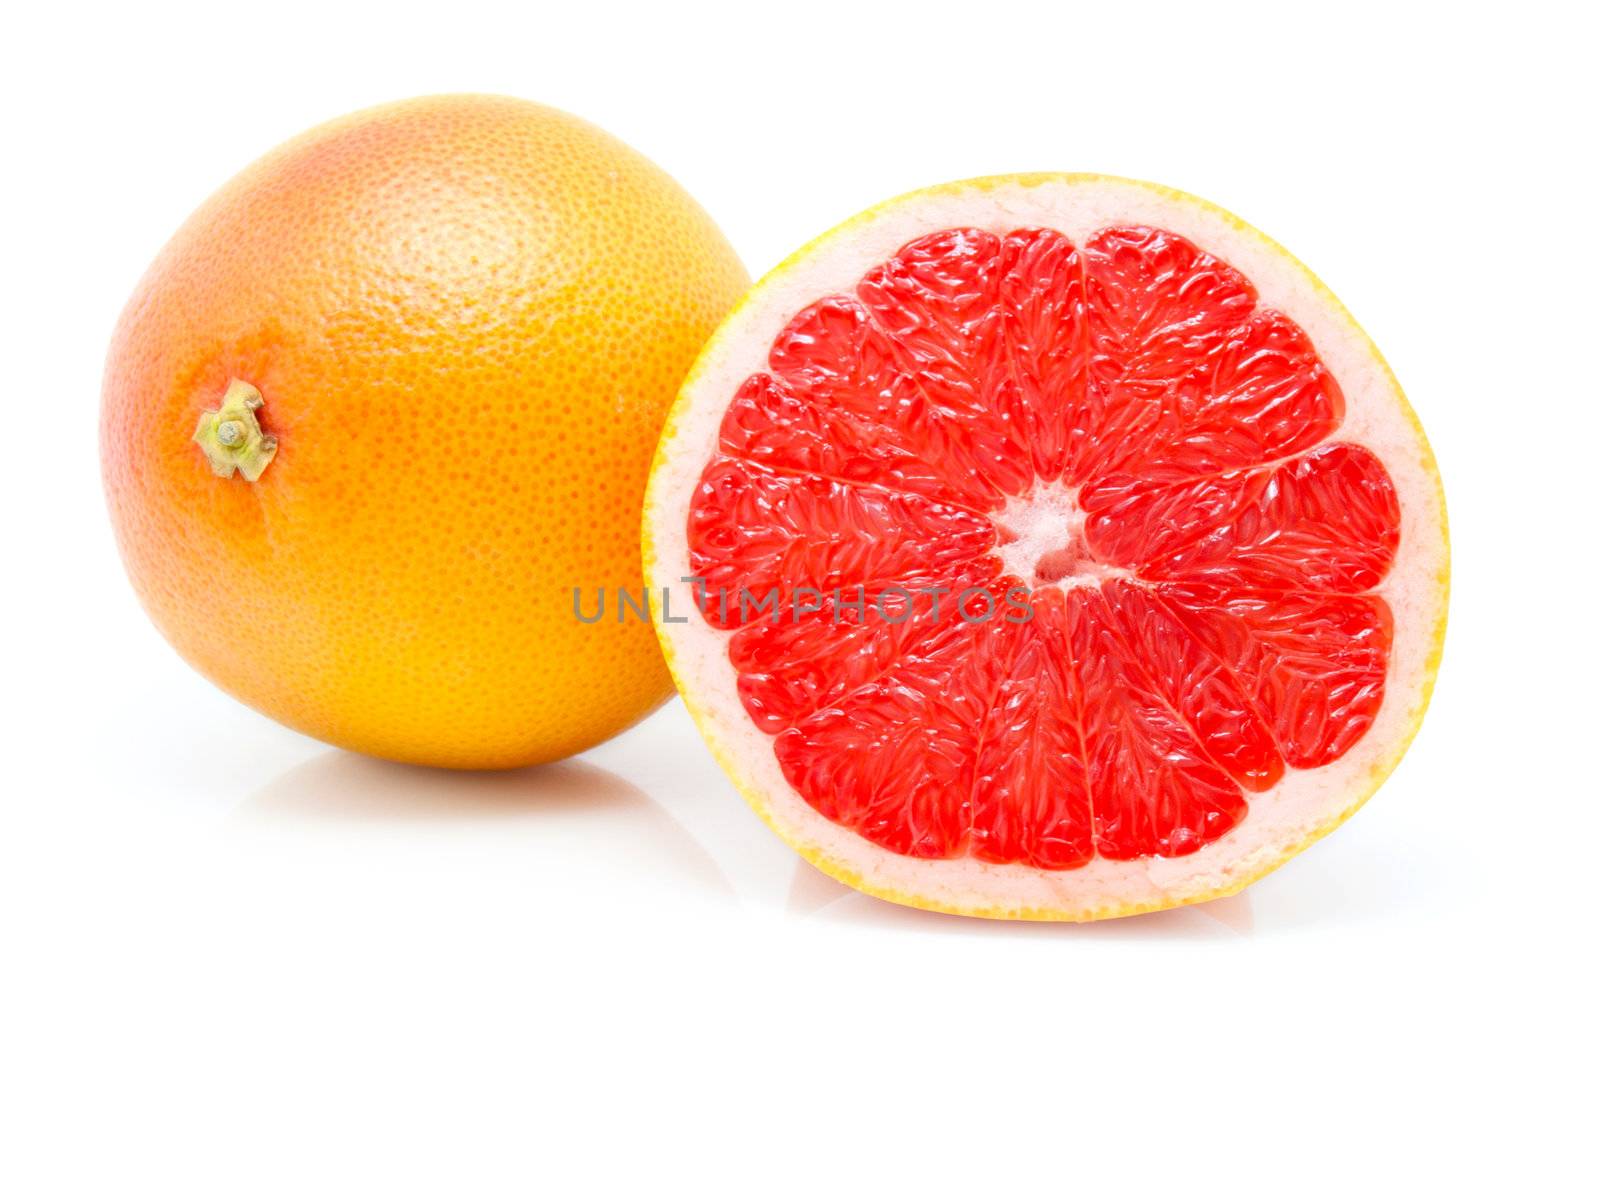 grapefruit on white background by motorolka